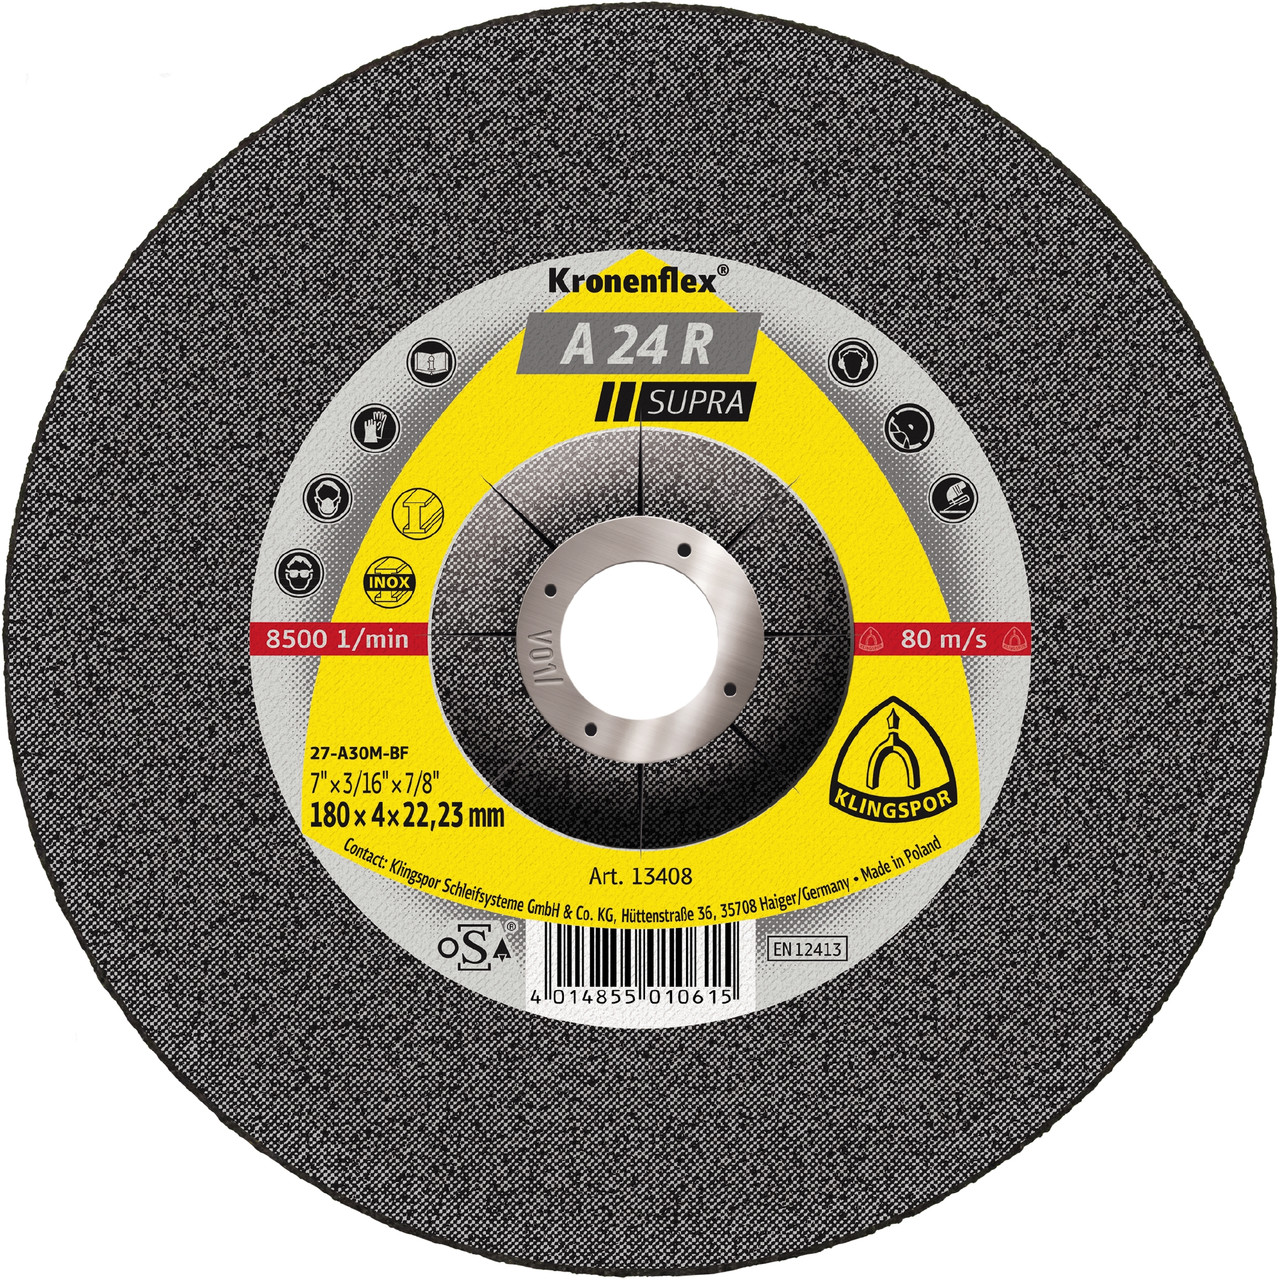 Grinding Disc - (A24R) Supra/12200Rpm Medium 125X4X22Mm